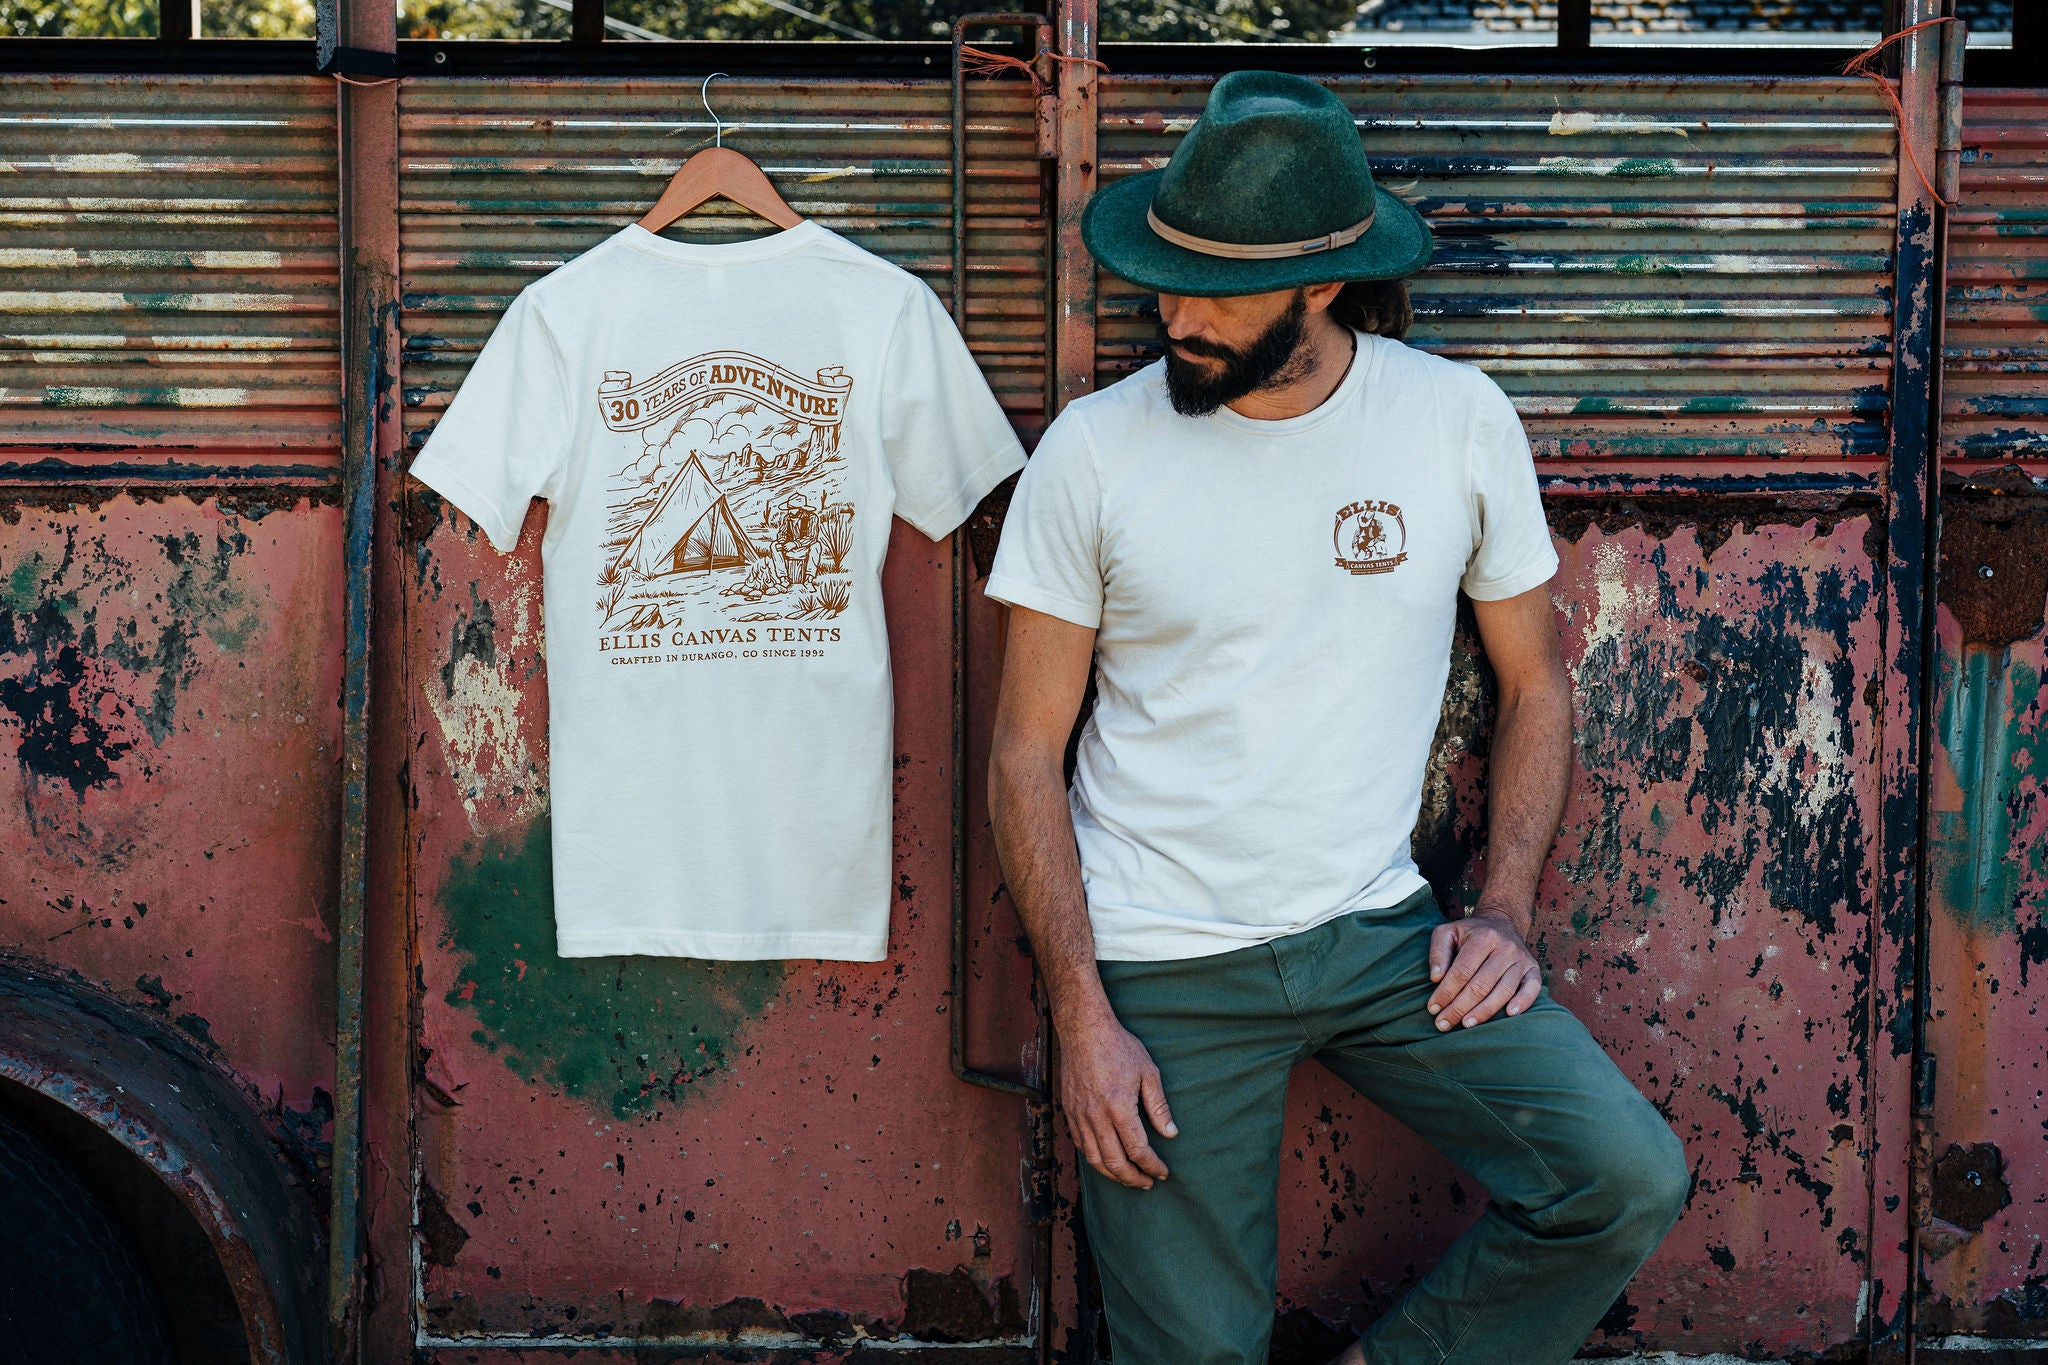 Ellis Canvas Tents 30th anniversary t-shirt cowboy style